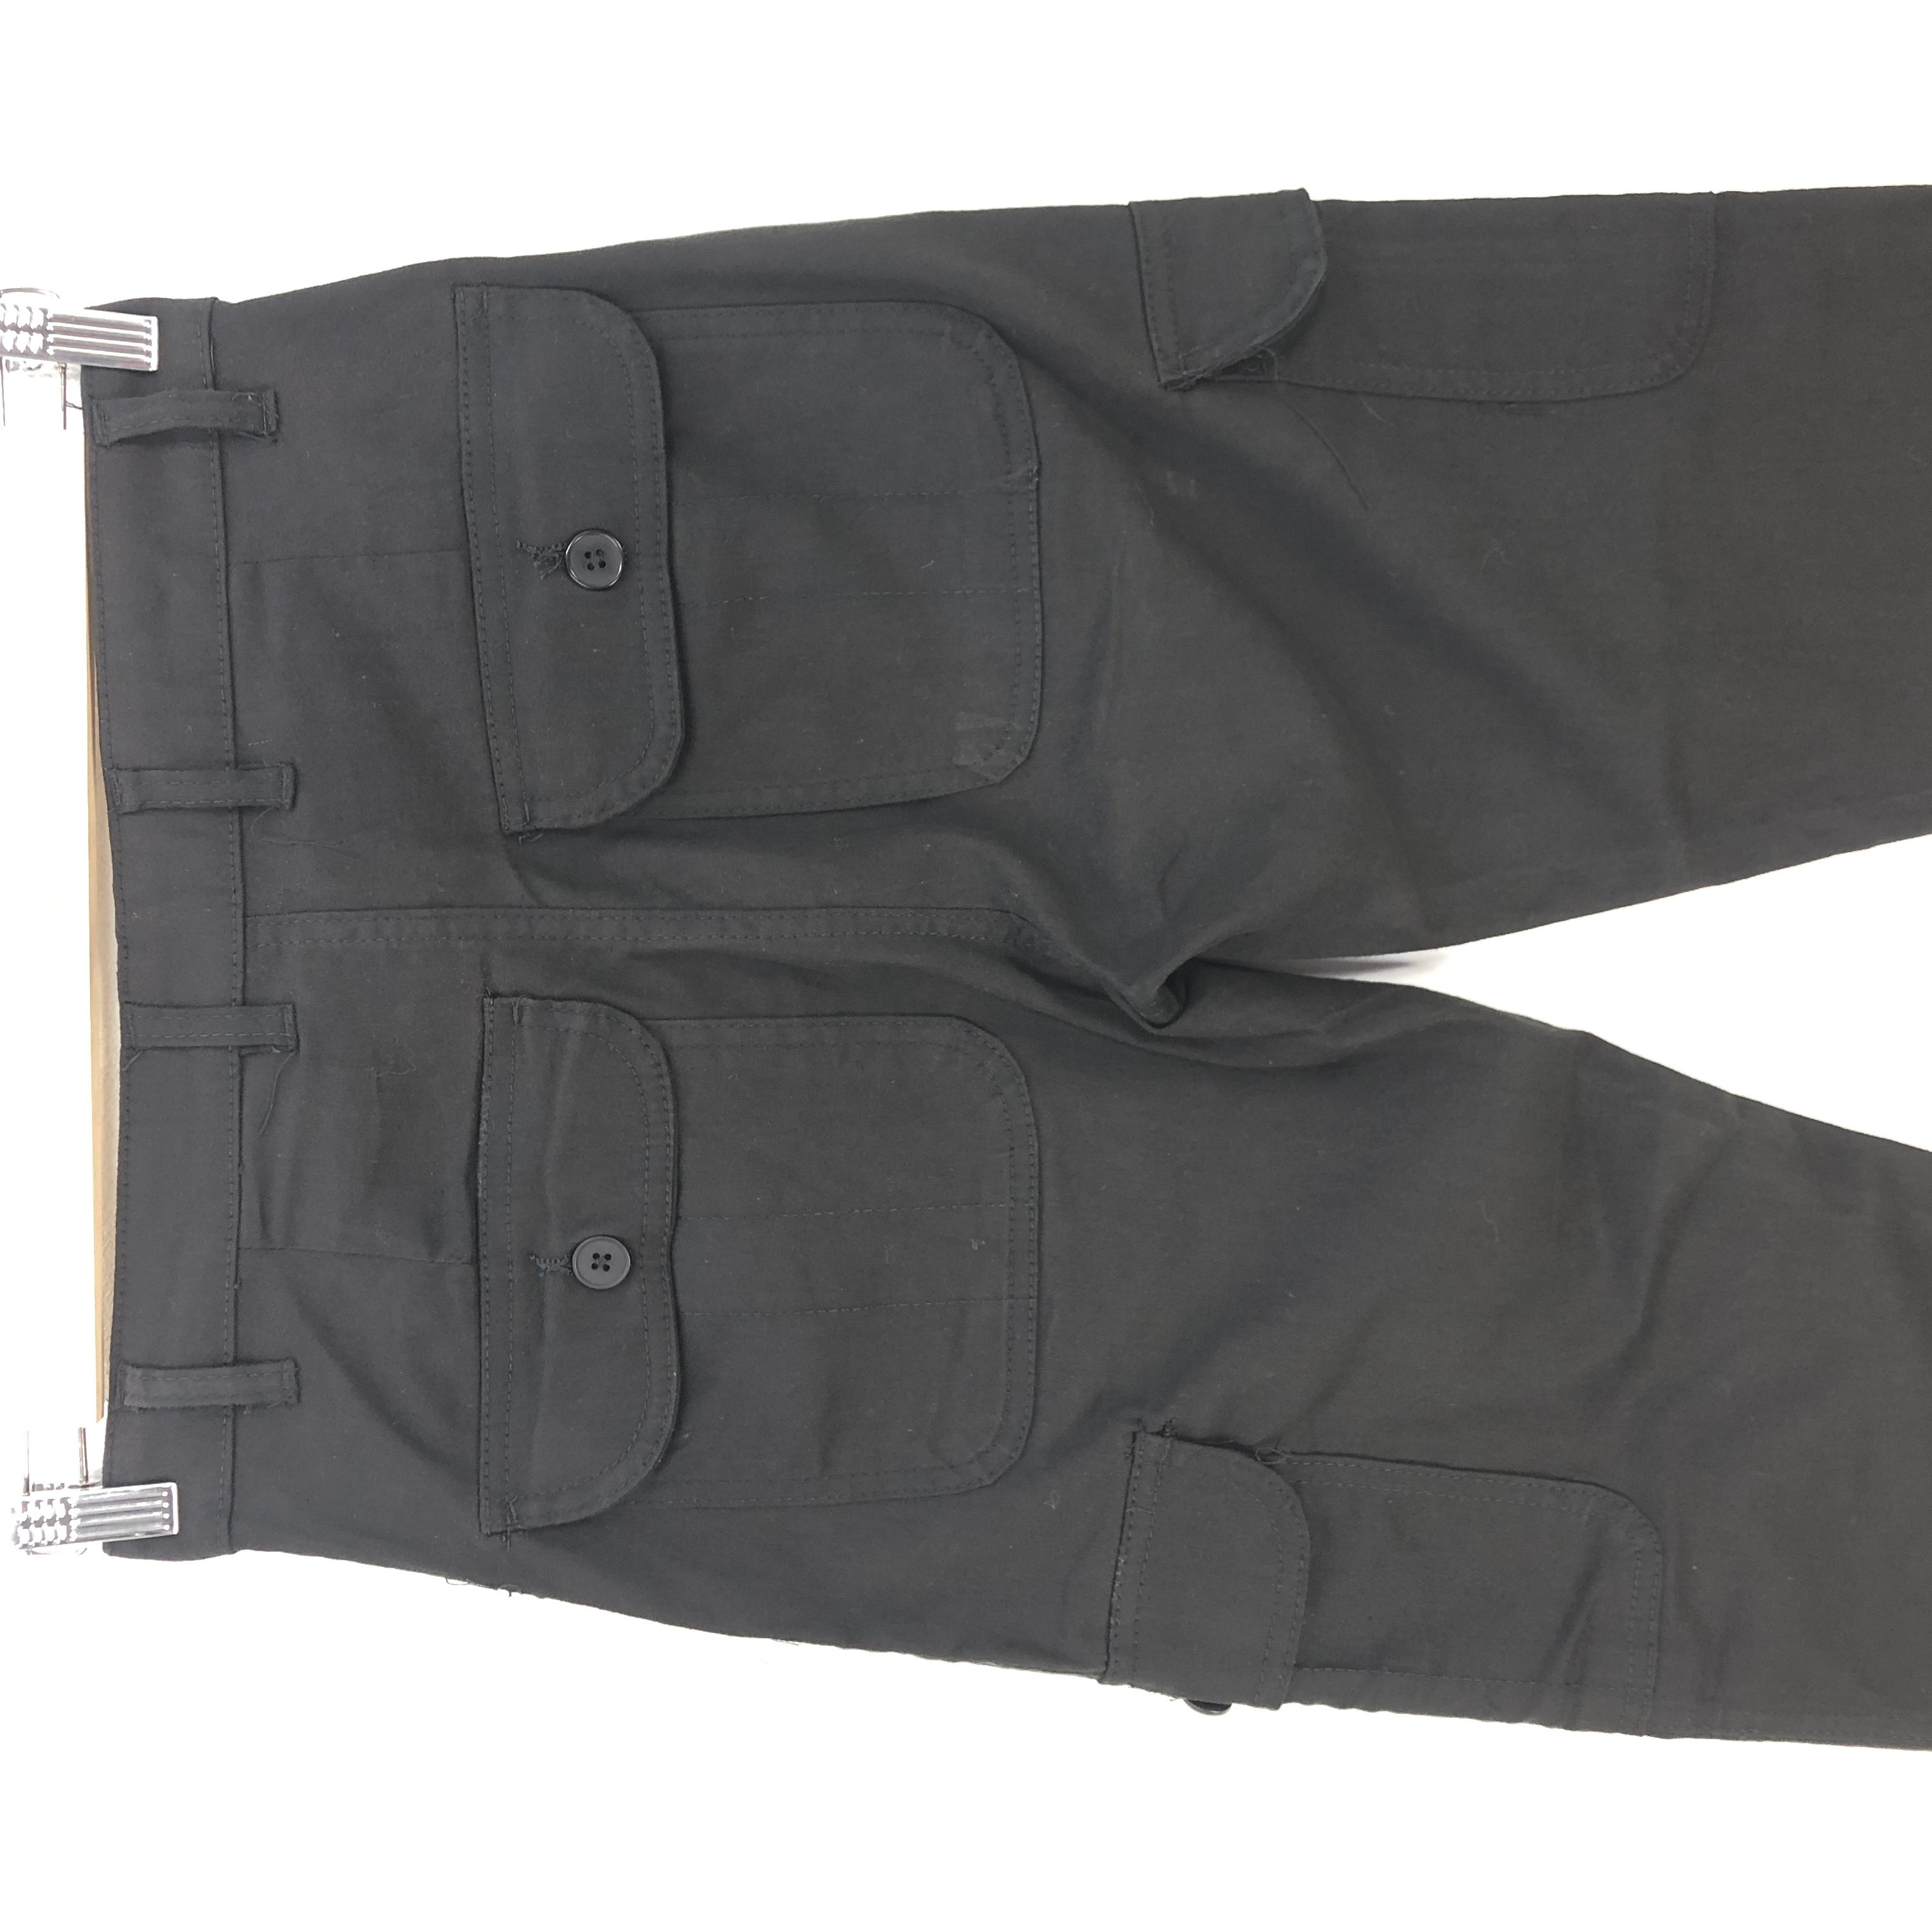 Vintage - Japanese Multi Pocket Cargo Pants Trousers Fatigue Pants - 6